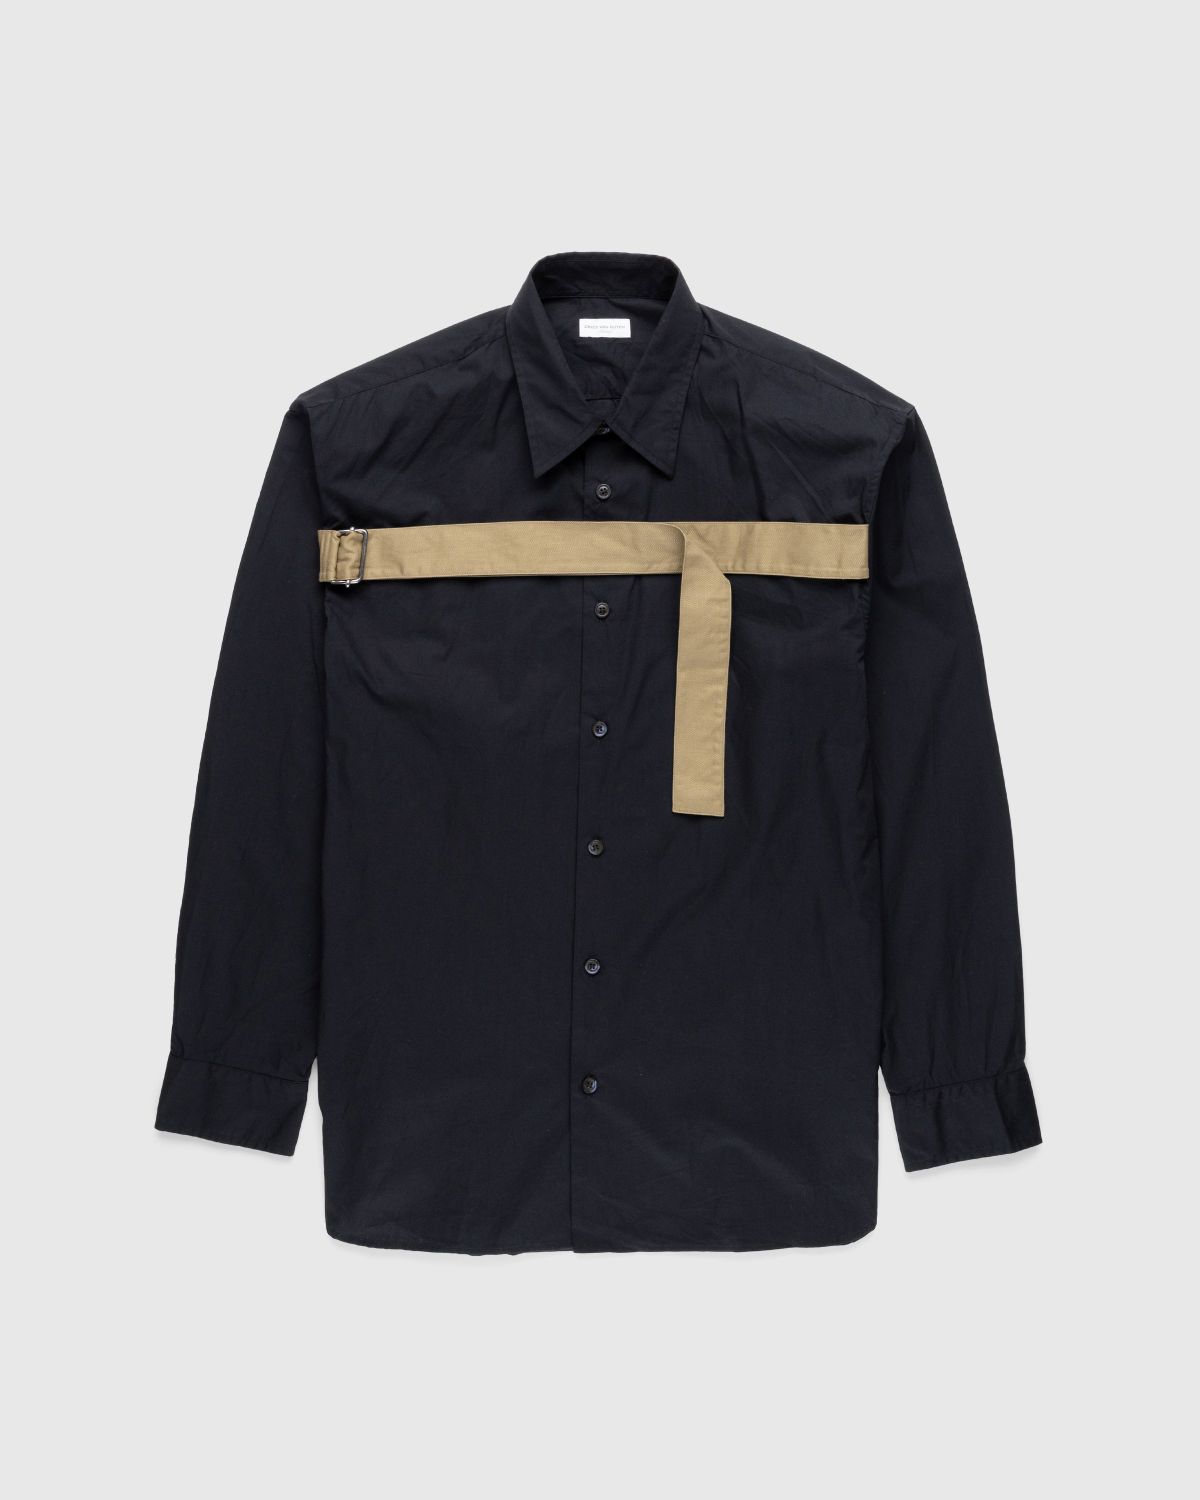 Dries van Noten – Croom Bis Shirt Black - Shirts - Black - Image 1